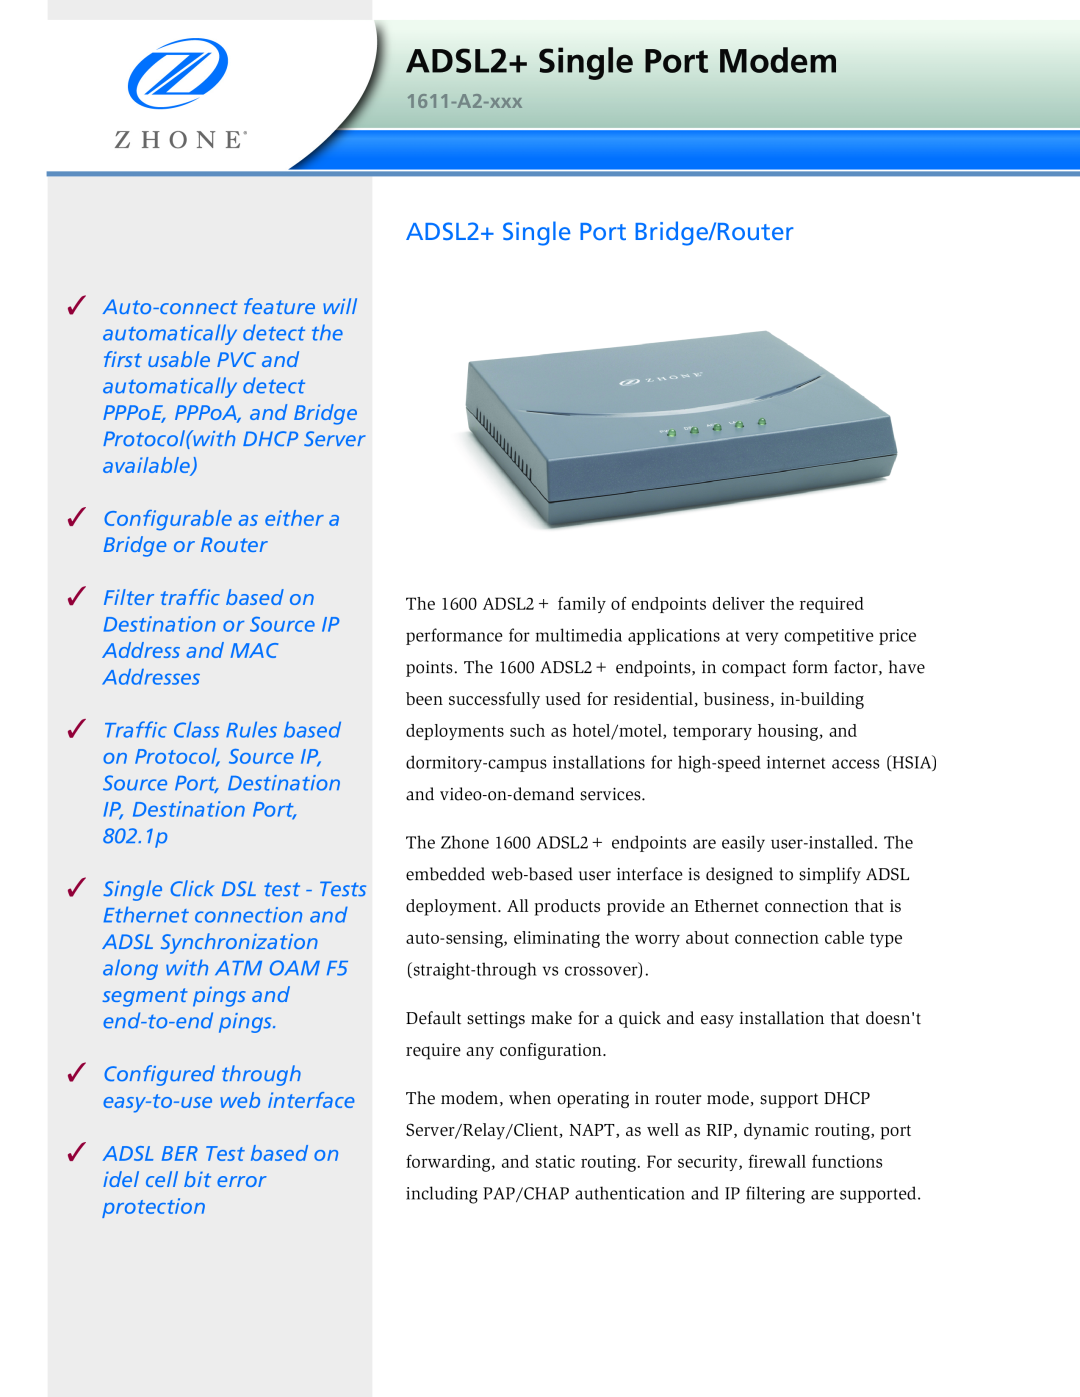 Zhone Technologies 1611-A2-xxx manual ADSL2+ Single Port Bridge/Router, ADSL2+ Single Port Modem 